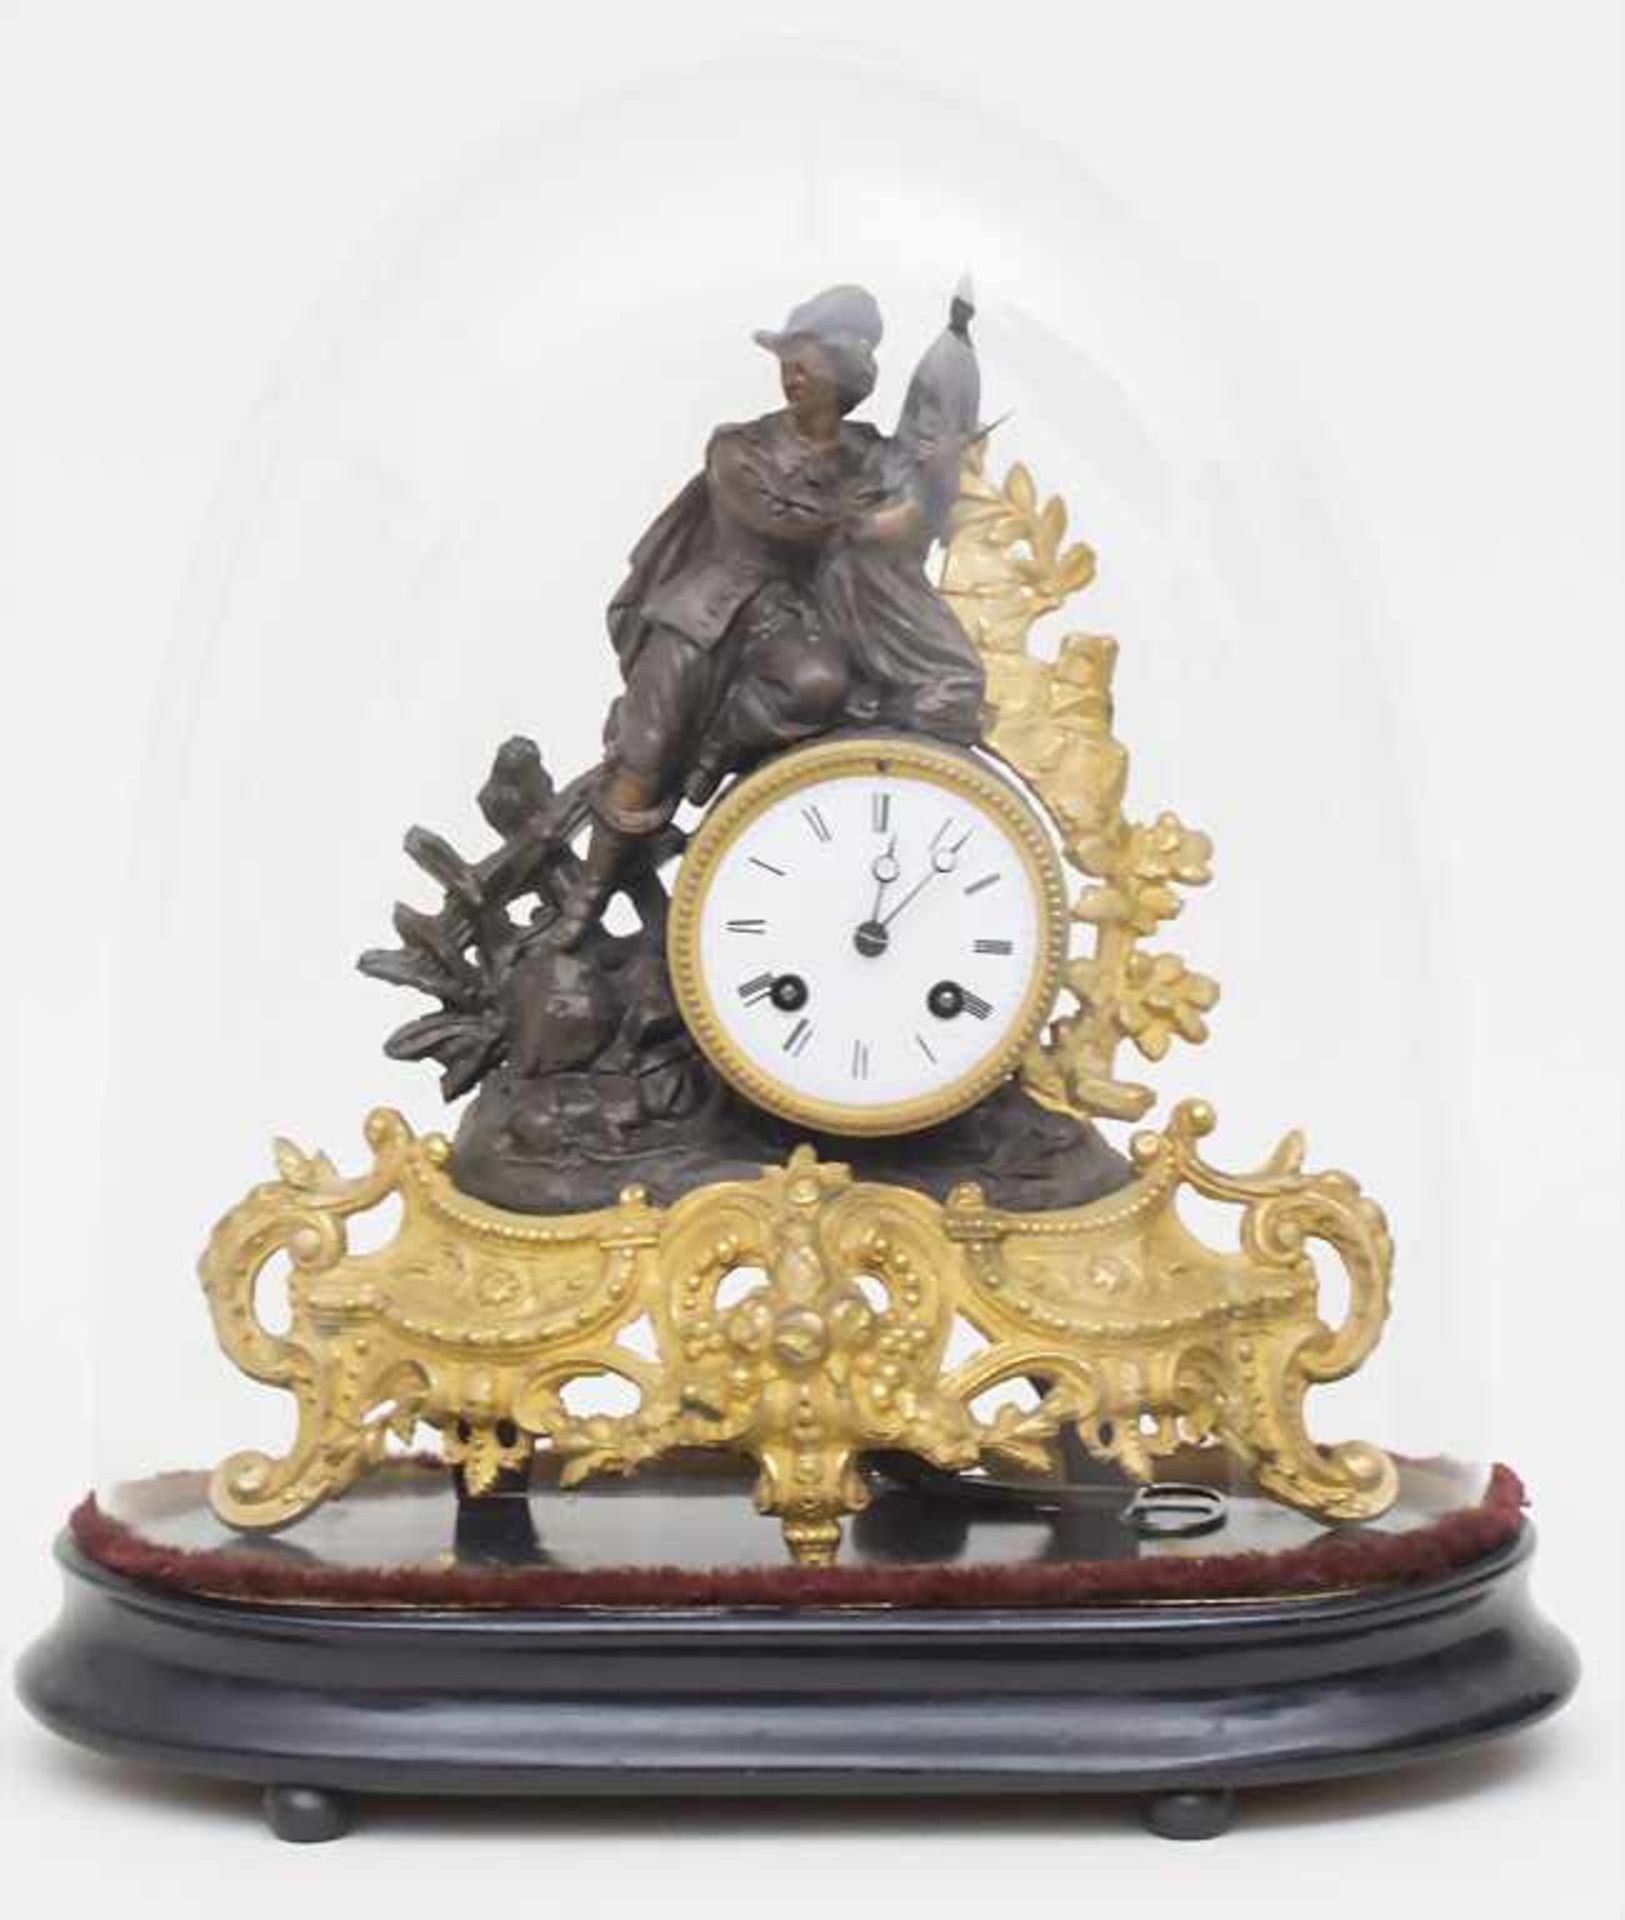 Pendule mit Musketier, Napoleon III, Frankreich/France, ca 1890Gehäuse: Metall vergoldet bzw.